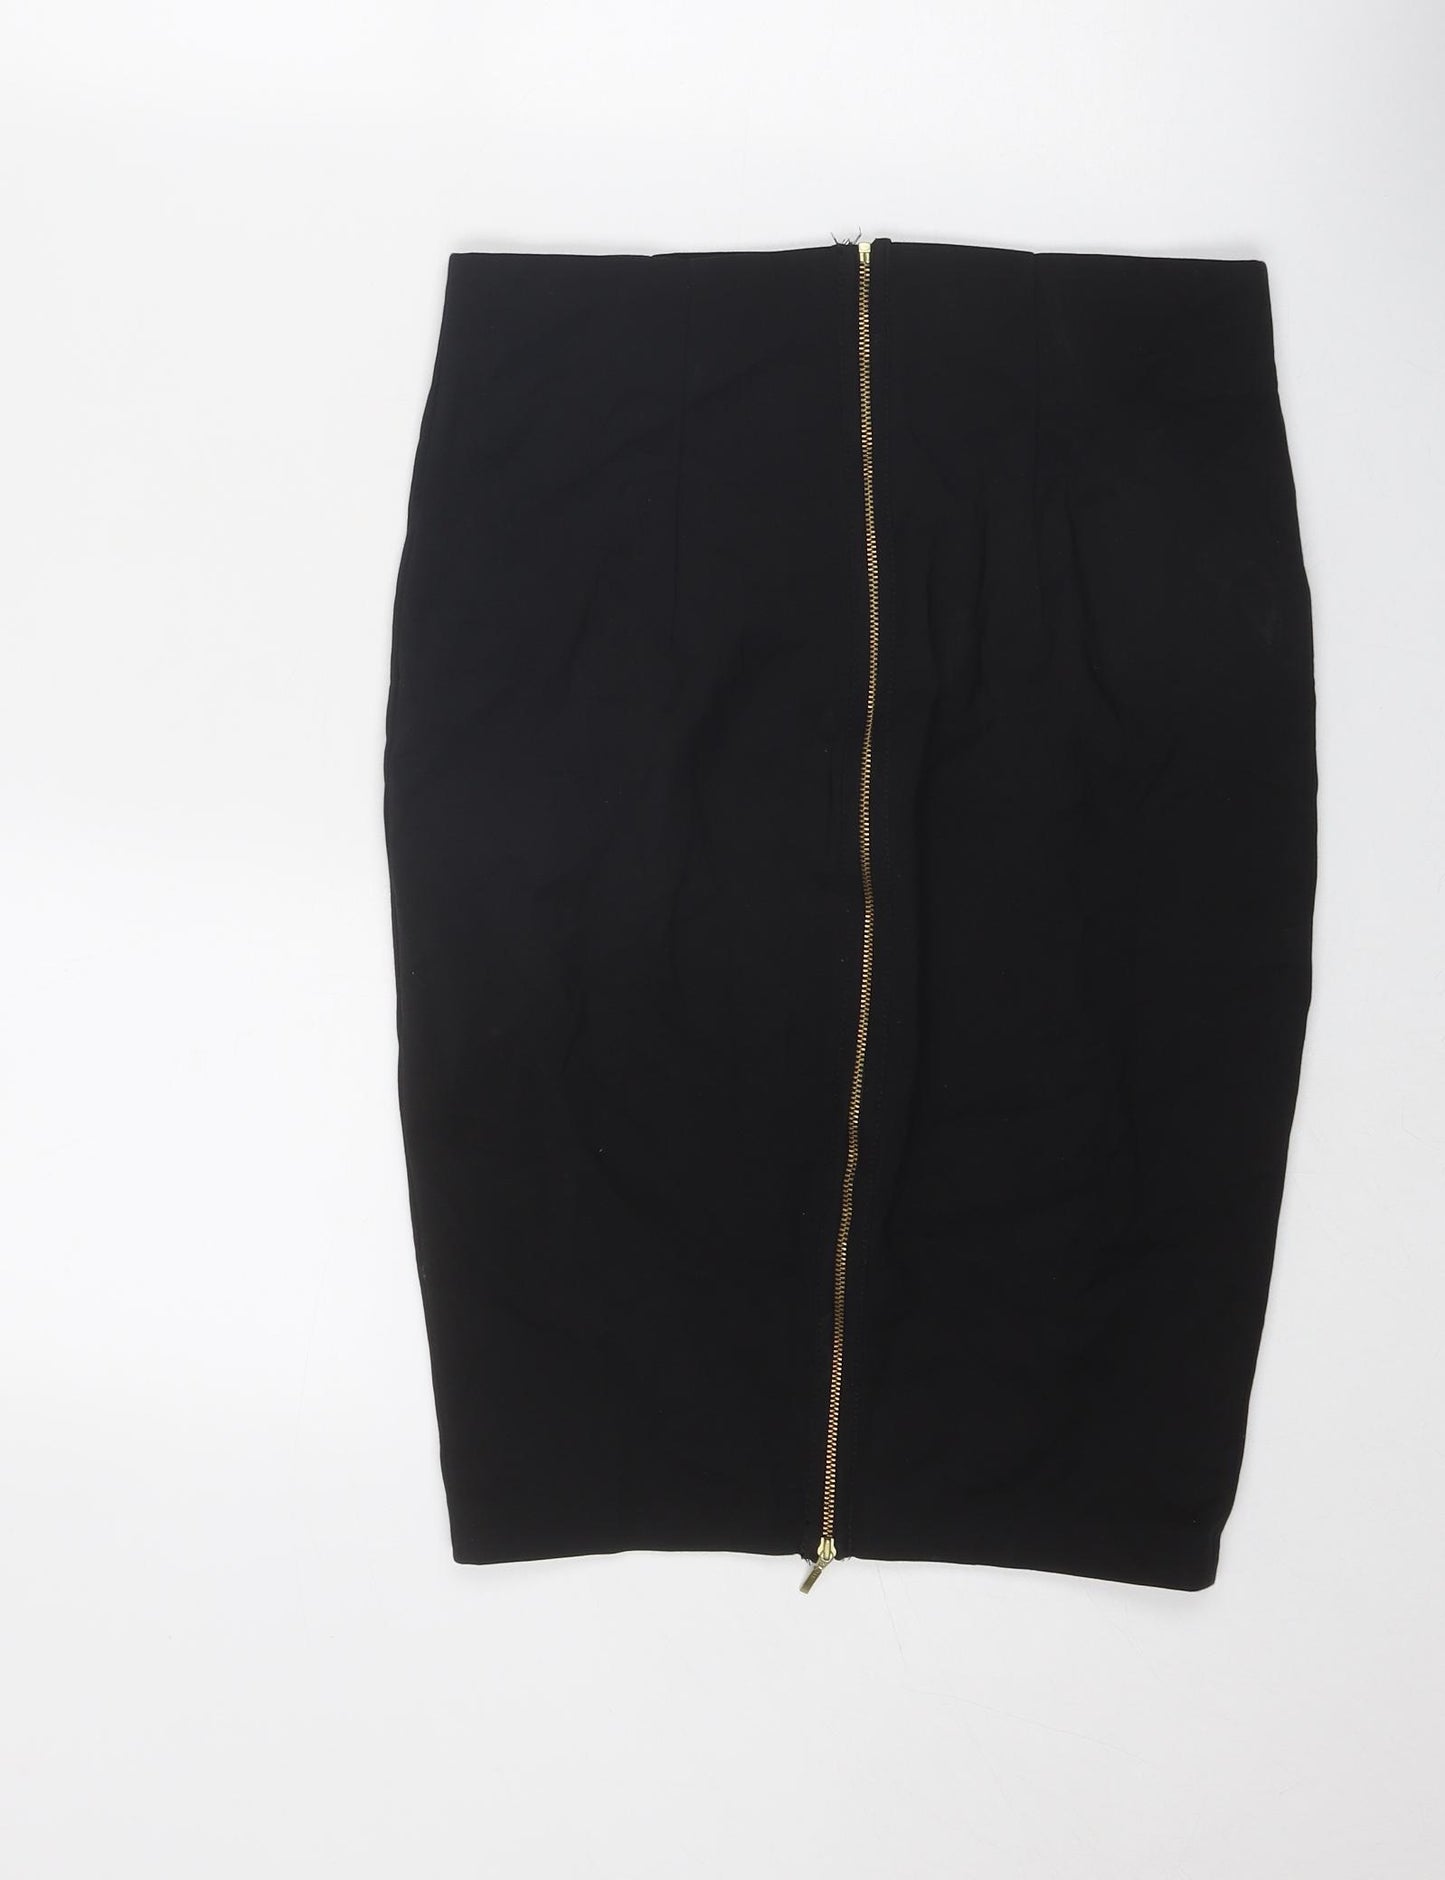 Zara Womens Black Polyester A-Line Skirt Size L Zip